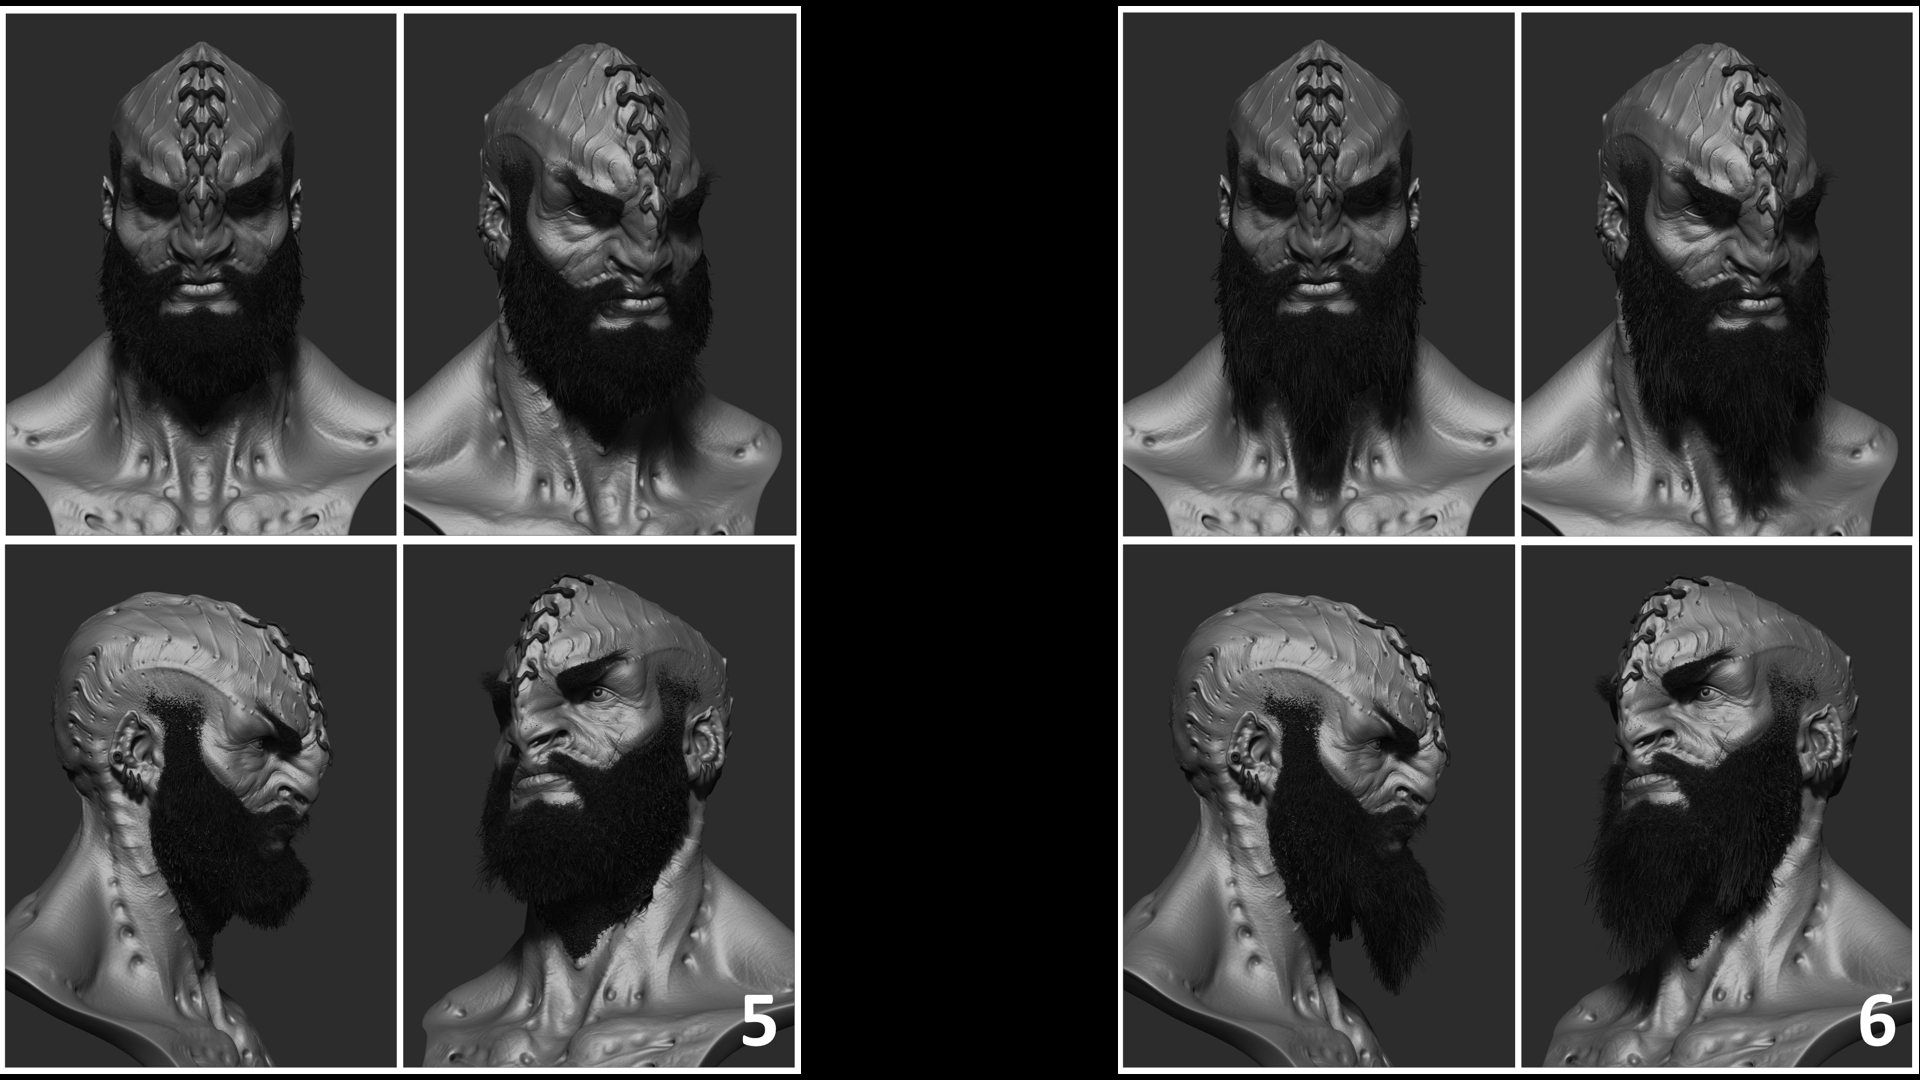 alternate-klingon-designs-for-star-trek-into-darkness-3.jpg